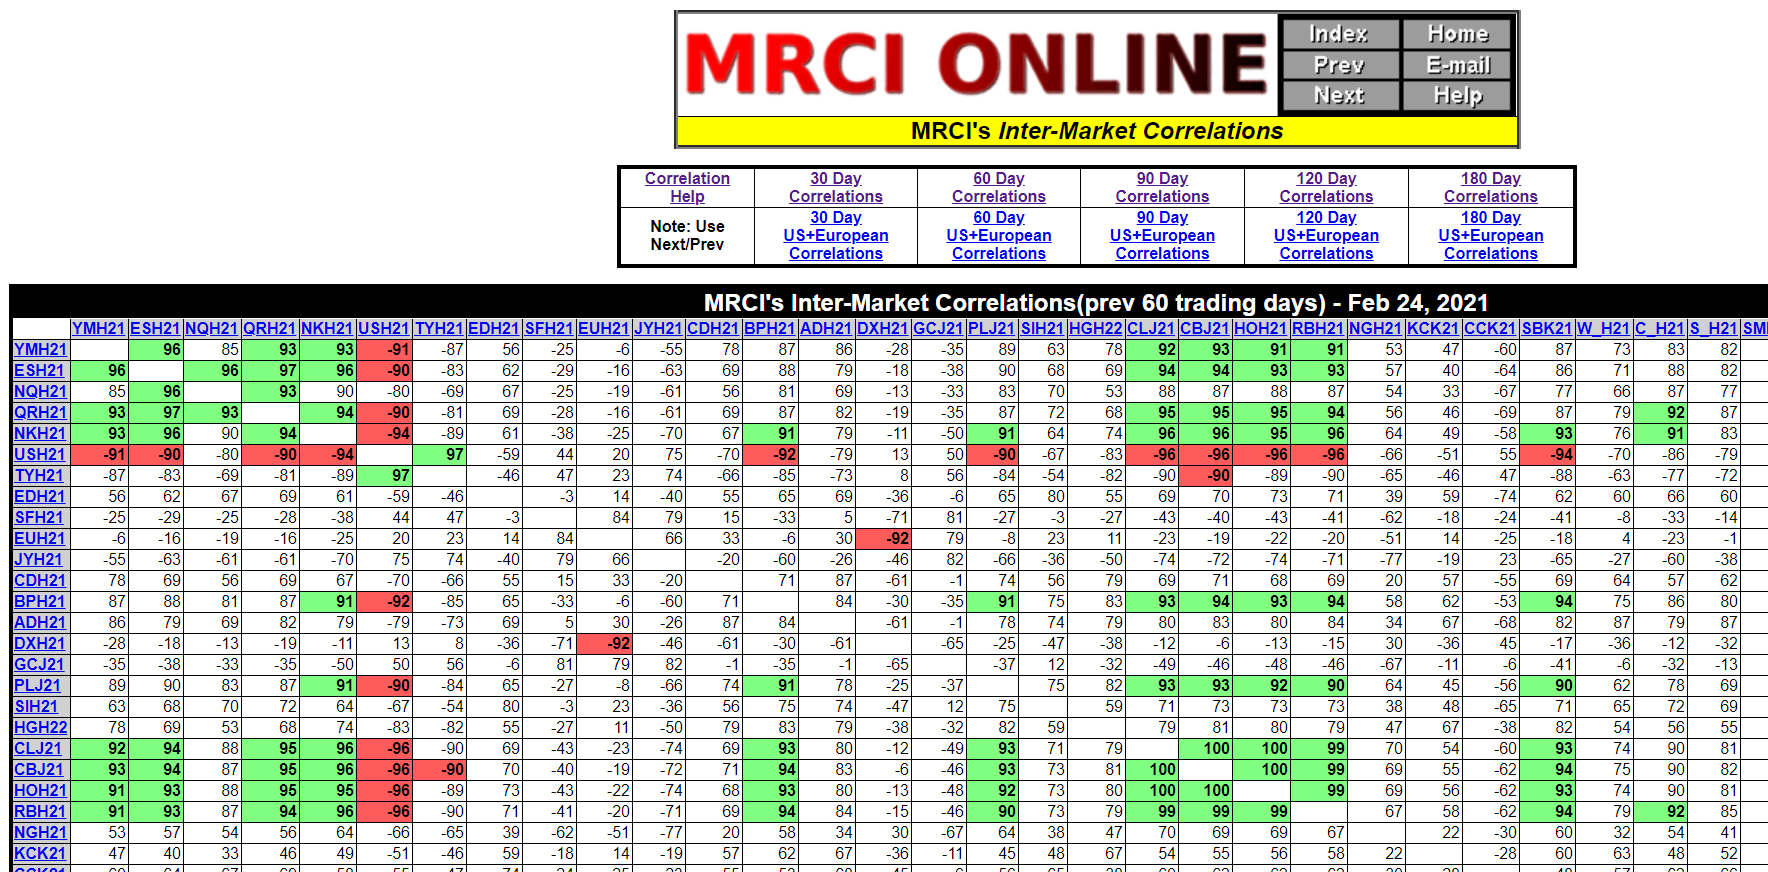 MRCI's Inter-Market Correlations